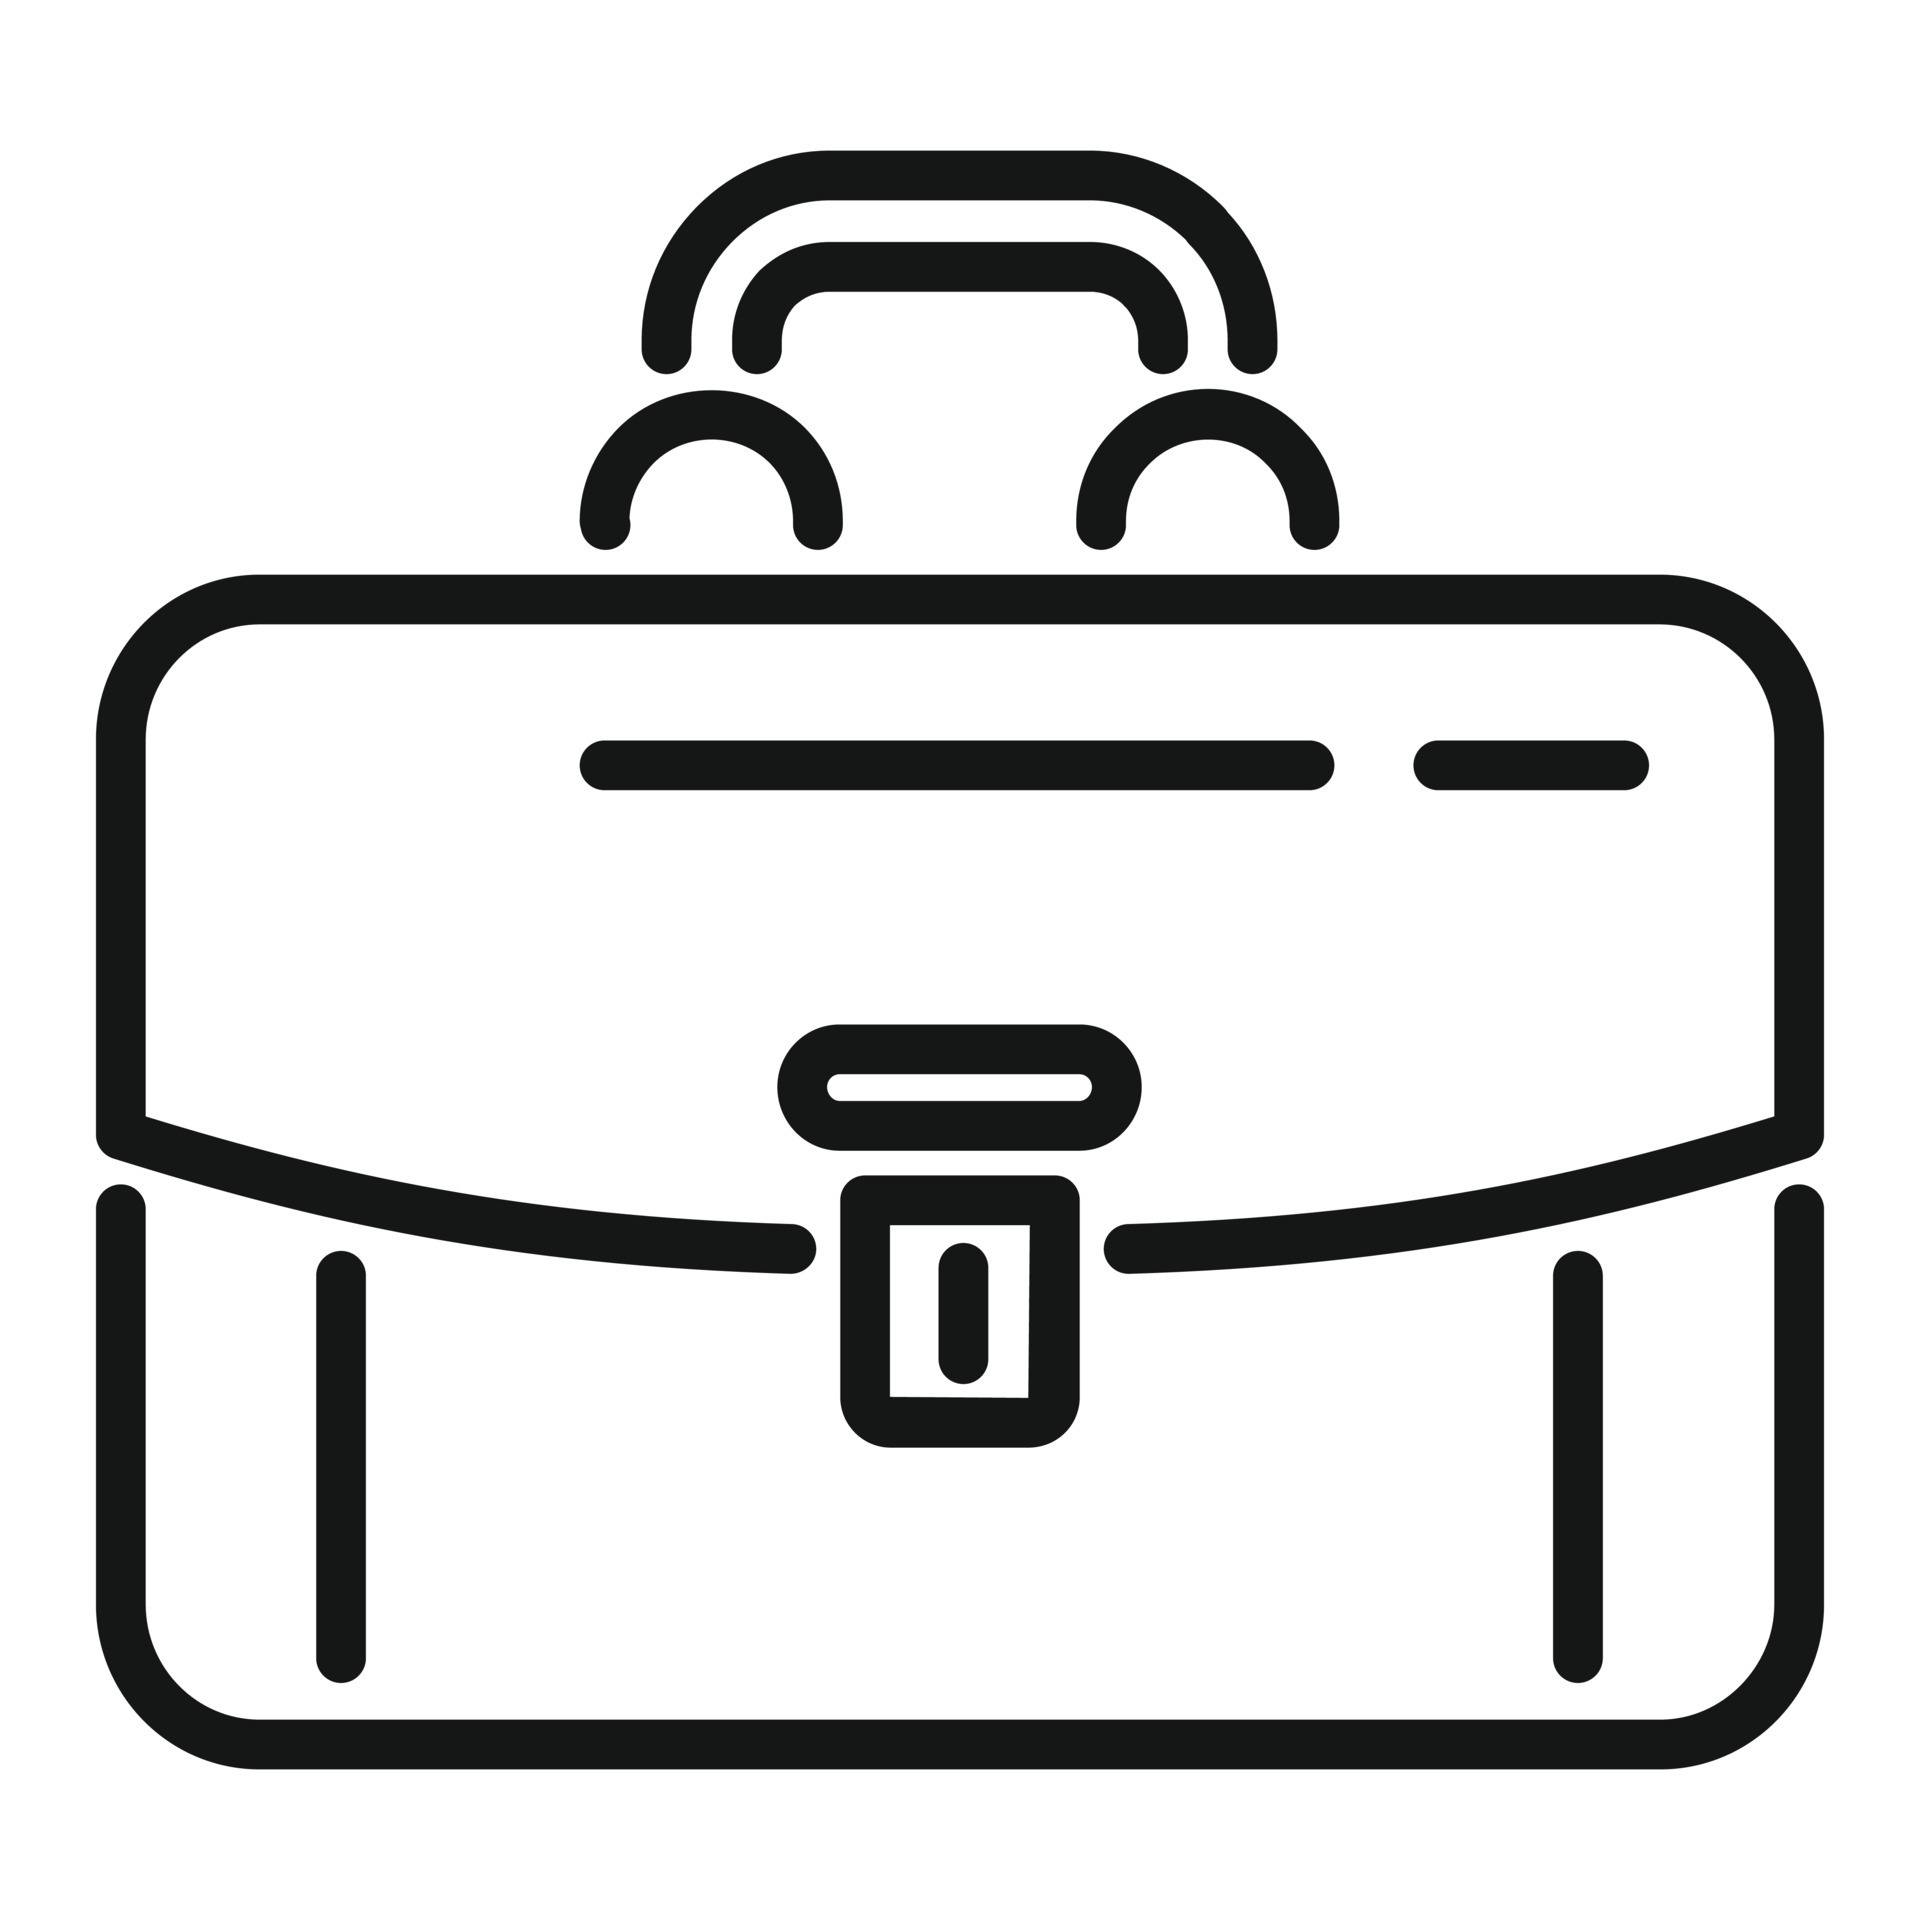 https://static.vecteezy.com/system/resources/previews/015/157/131/original/work-briefcase-icon-outline-case-bag-vector.jpg